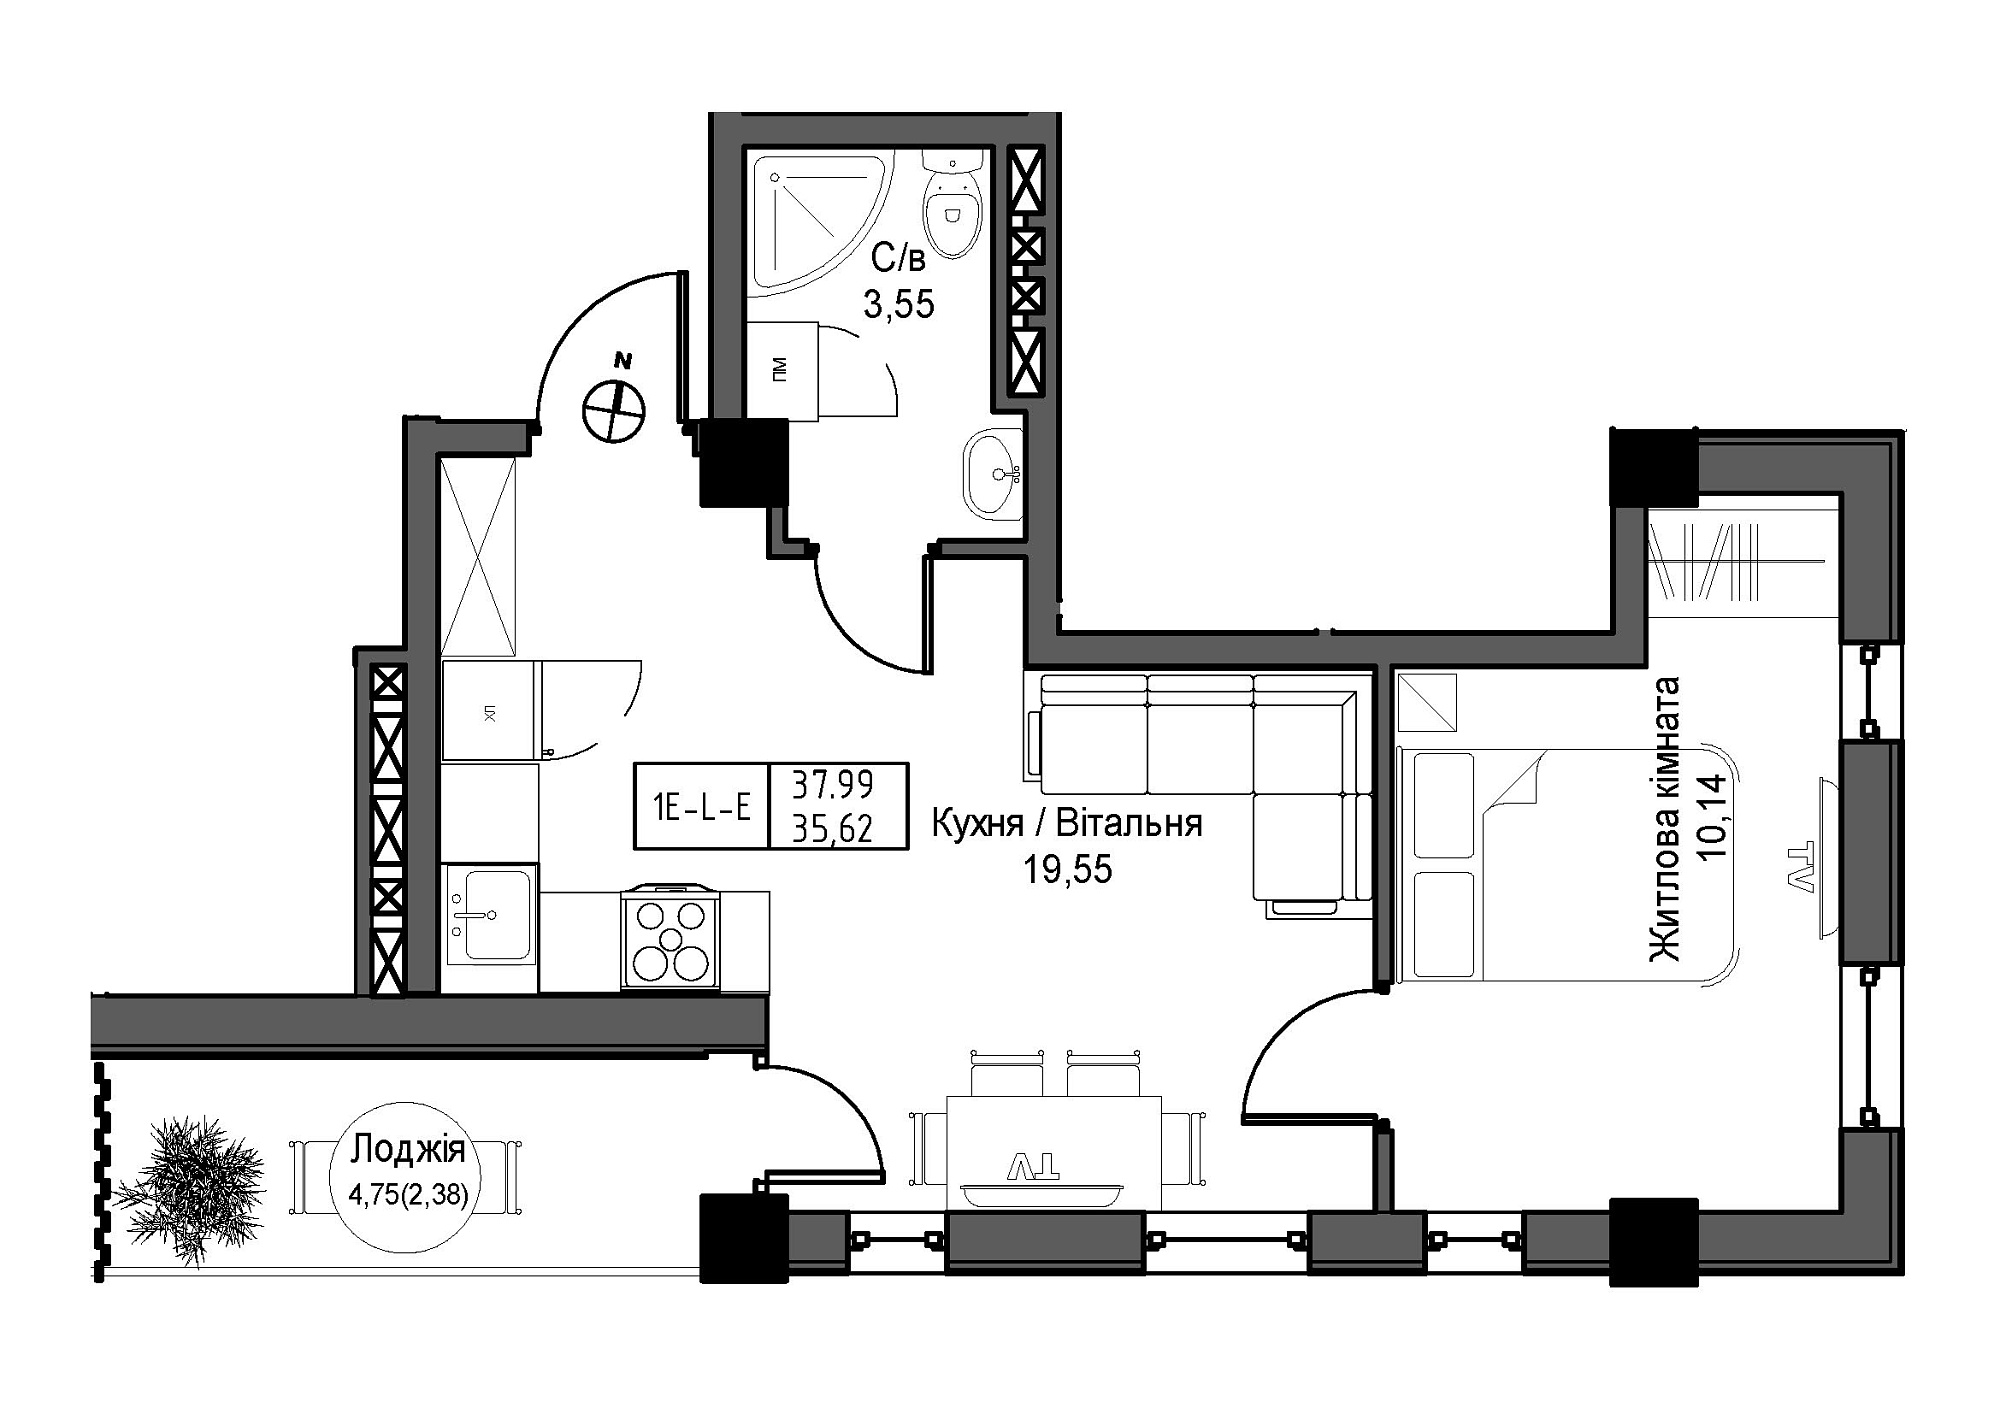 Планування 1-к квартира площею 35.62м2, UM-007-06/0009.